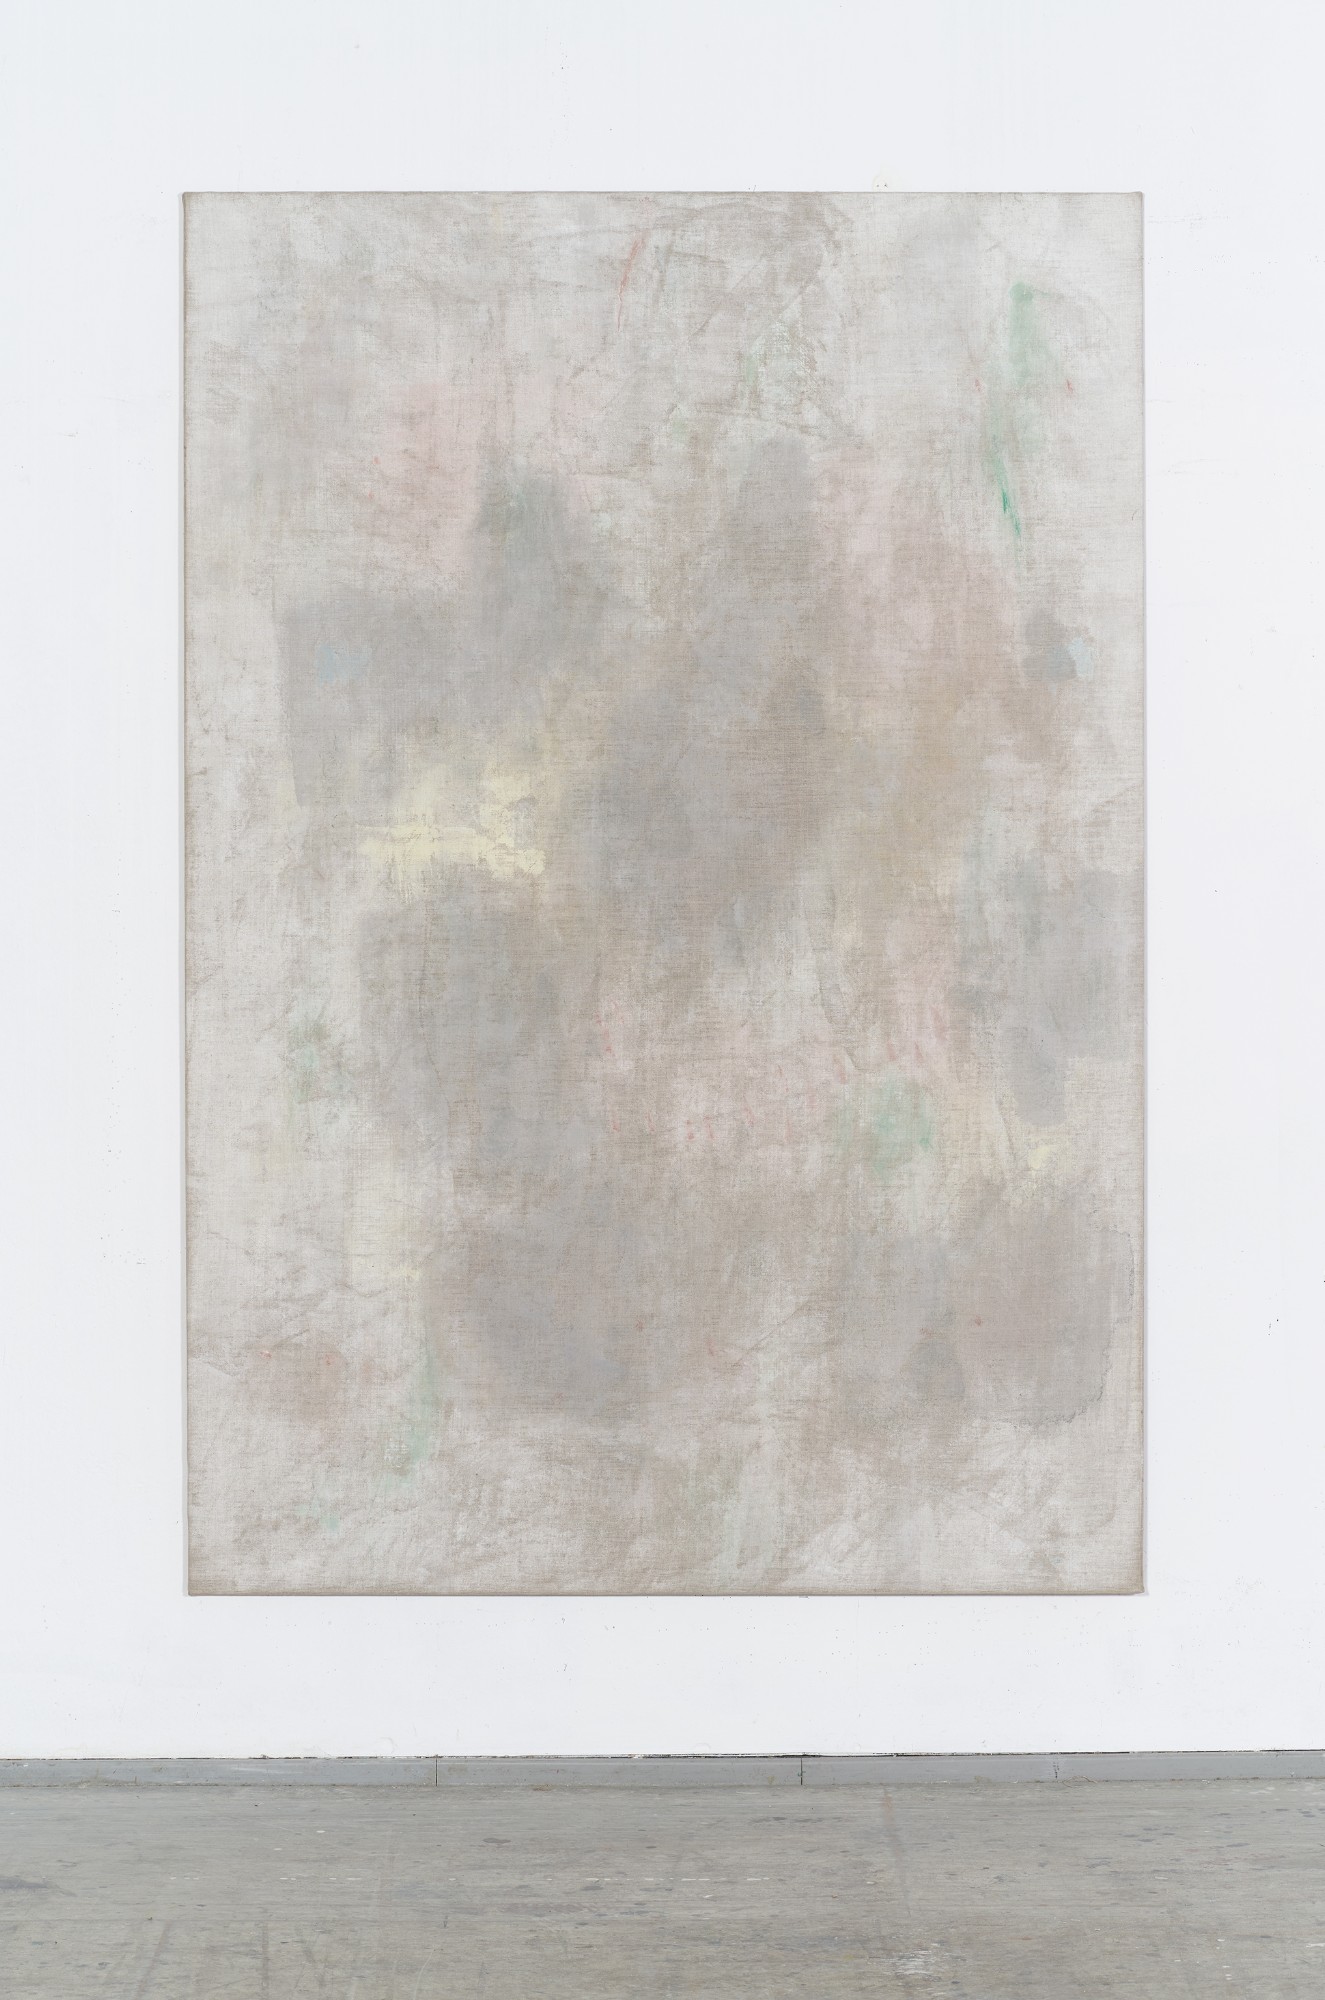 Erwin Gross, Jatropha 4, 2017, acrylic on canvas, 220 x 150 cm